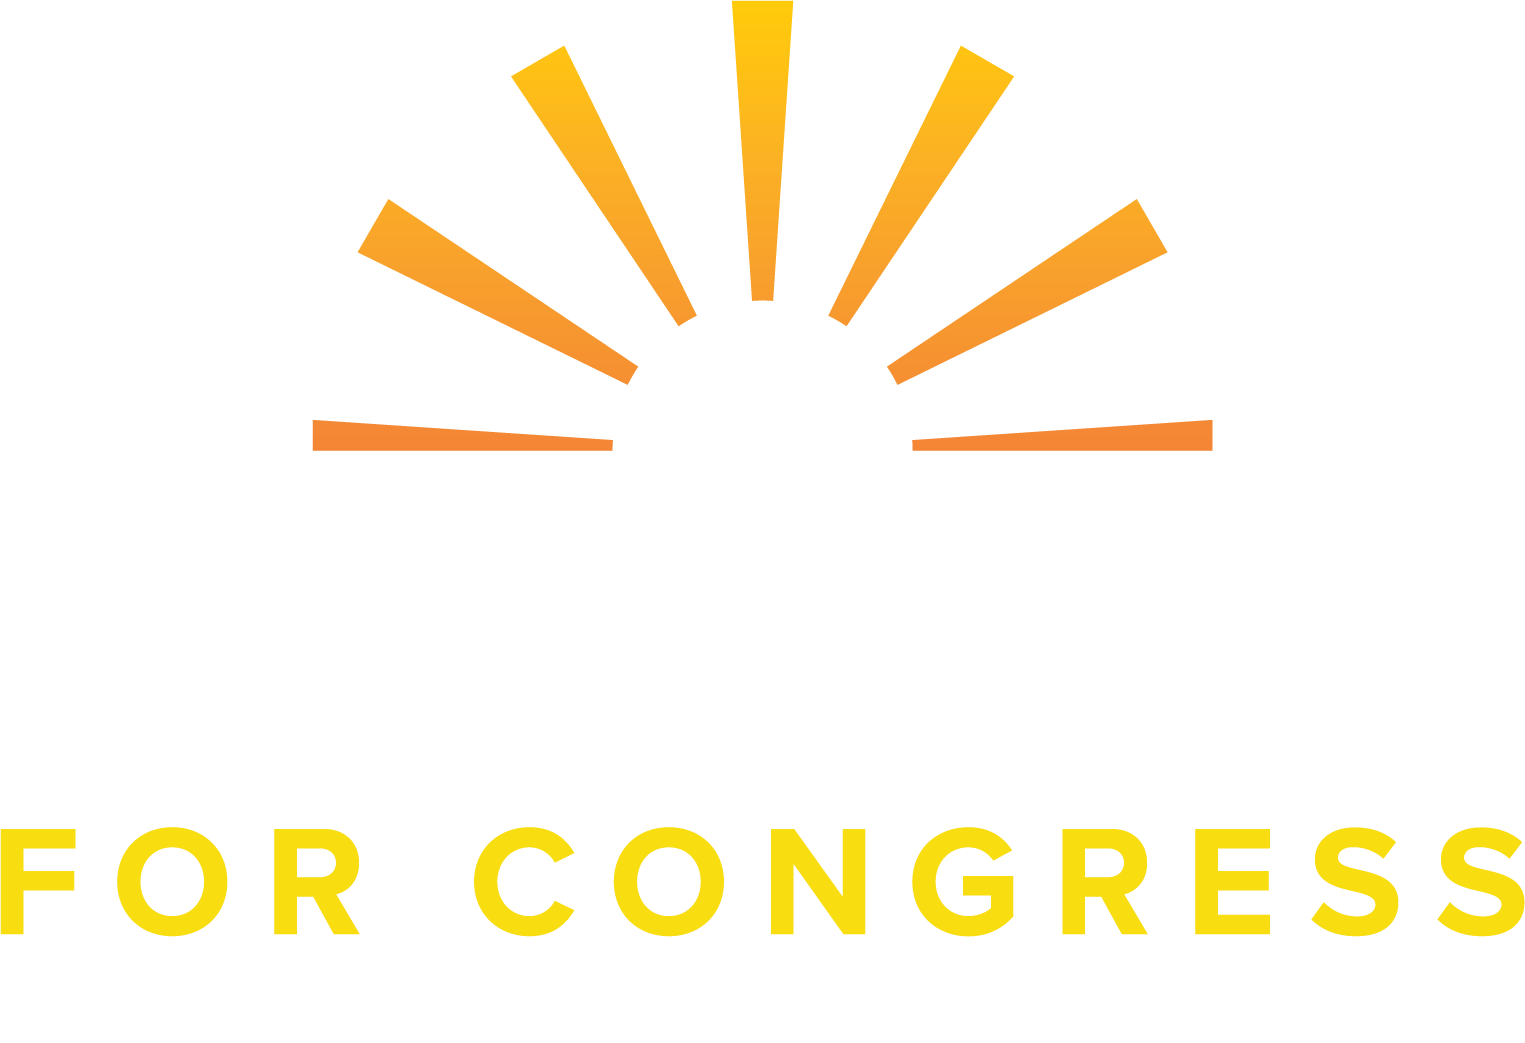 Houck For Congress - Faith. Family. Freedom. - Logo